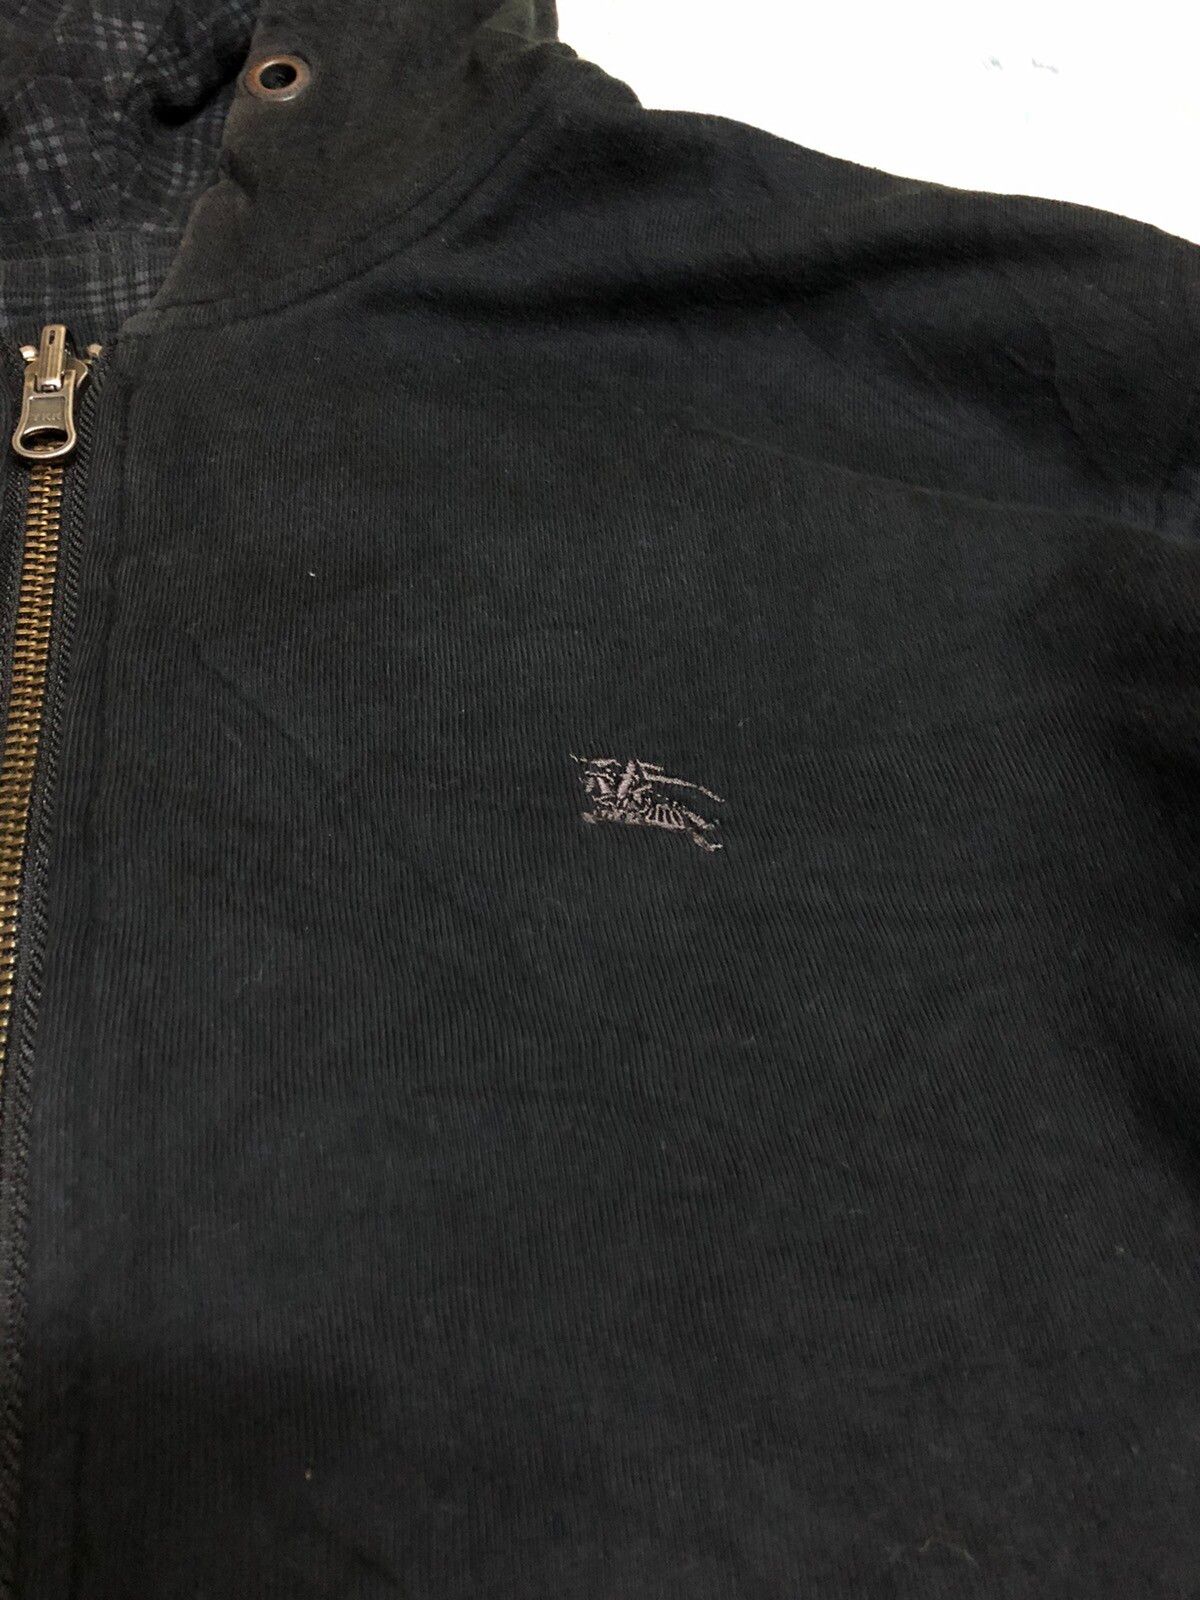 Burberry Blue Label Reversible Plaid Zipper Hoodie - 8